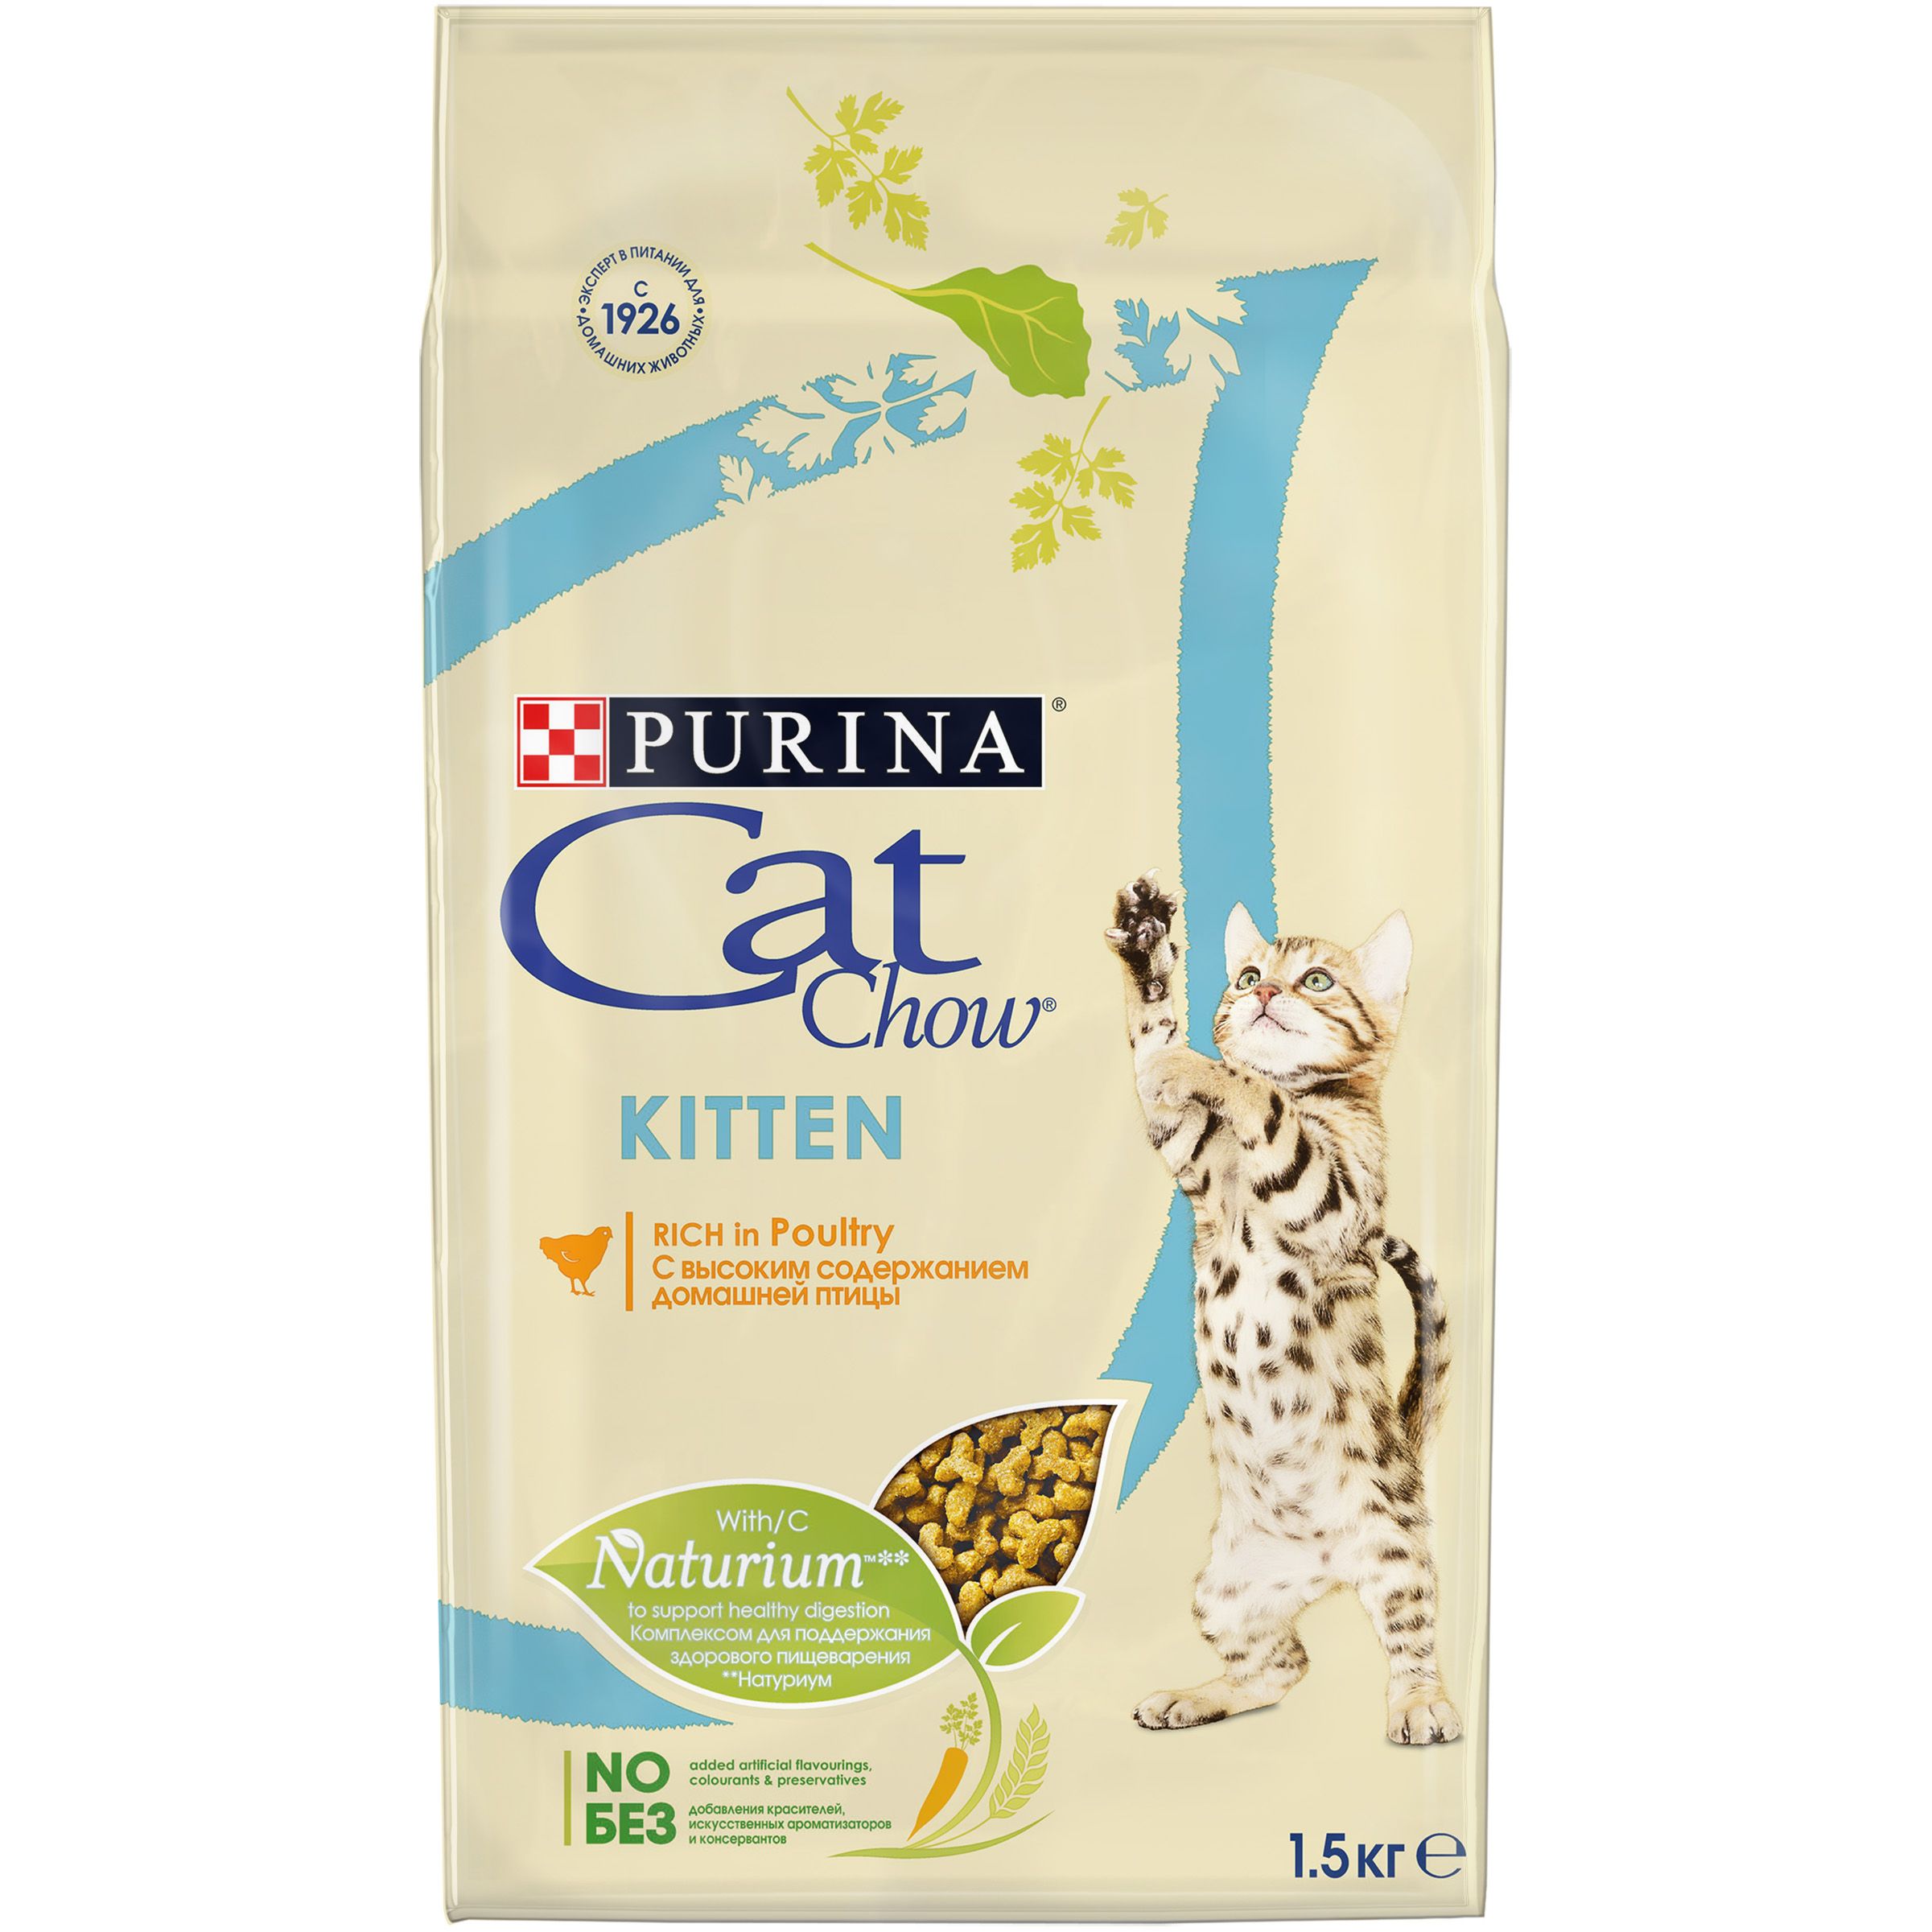 Purina Cat Chow Kitten Сухой корм для котят с домашней птицей 1,5 кг